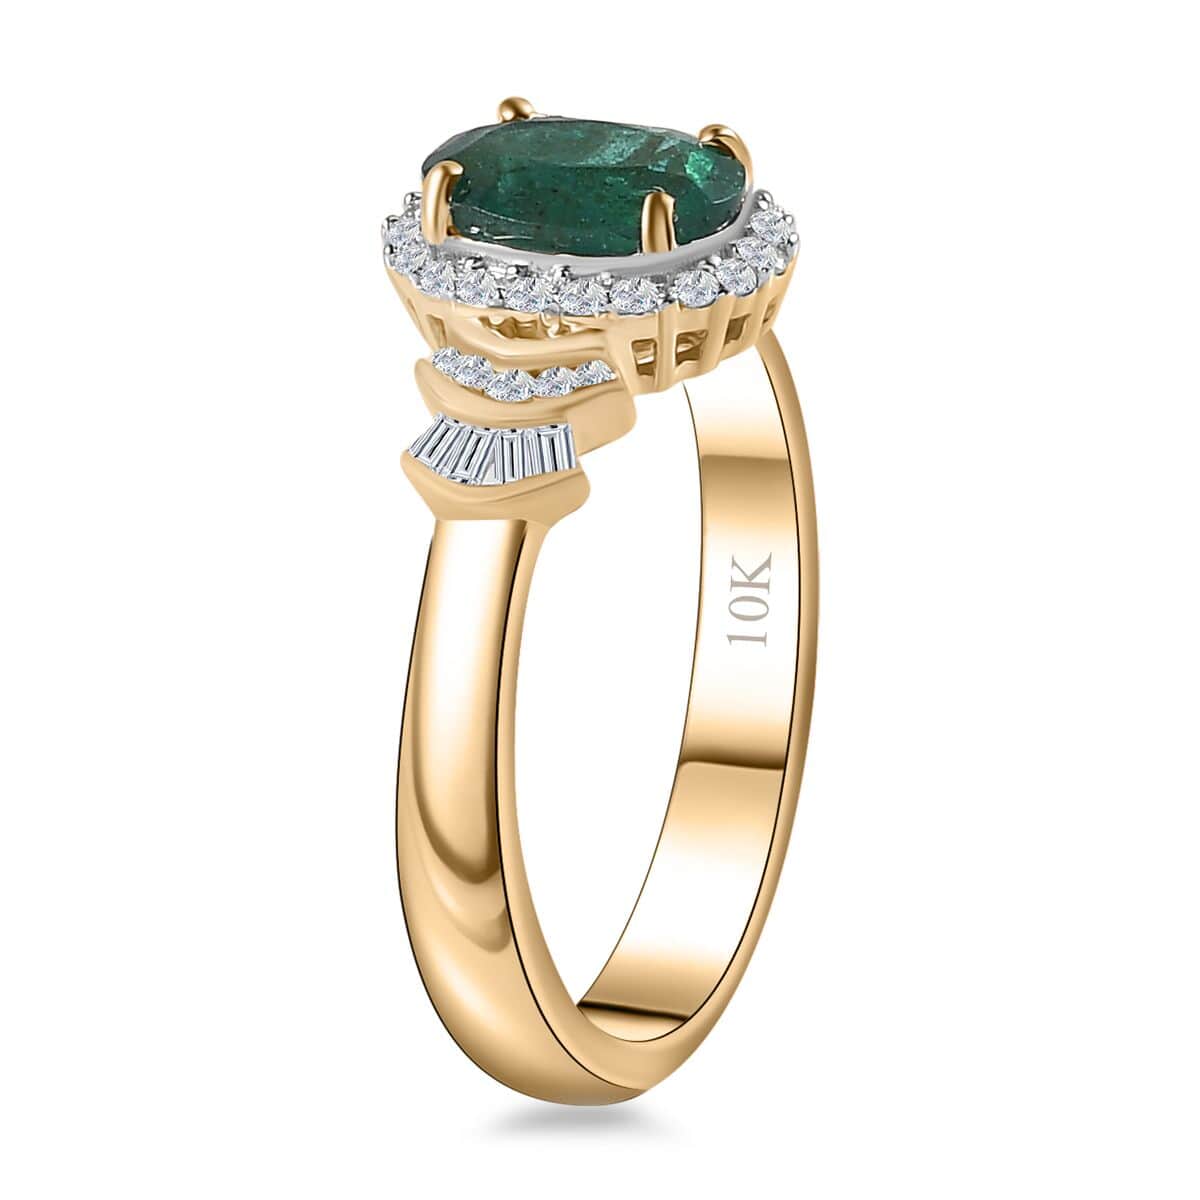 Luxoro 10K Yellow Gold Premium Kagem Zambian Emerald and G-H I2 Diamond Halo Ring (Size 7.0) 1.35 ctw image number 3